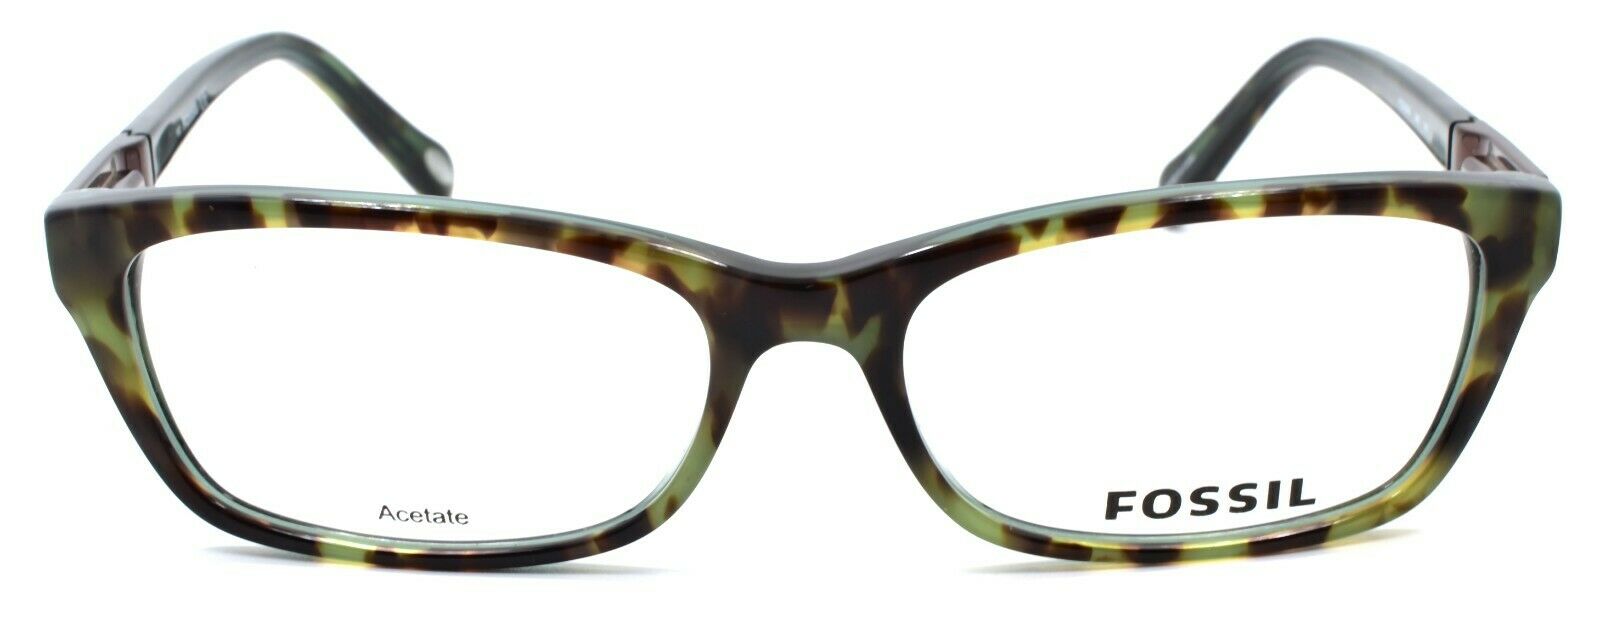 2-Fossil FOS 6049 JMV Women's Eyeglasses Frames 53-16-140 Havana Olive-716737697962-IKSpecs